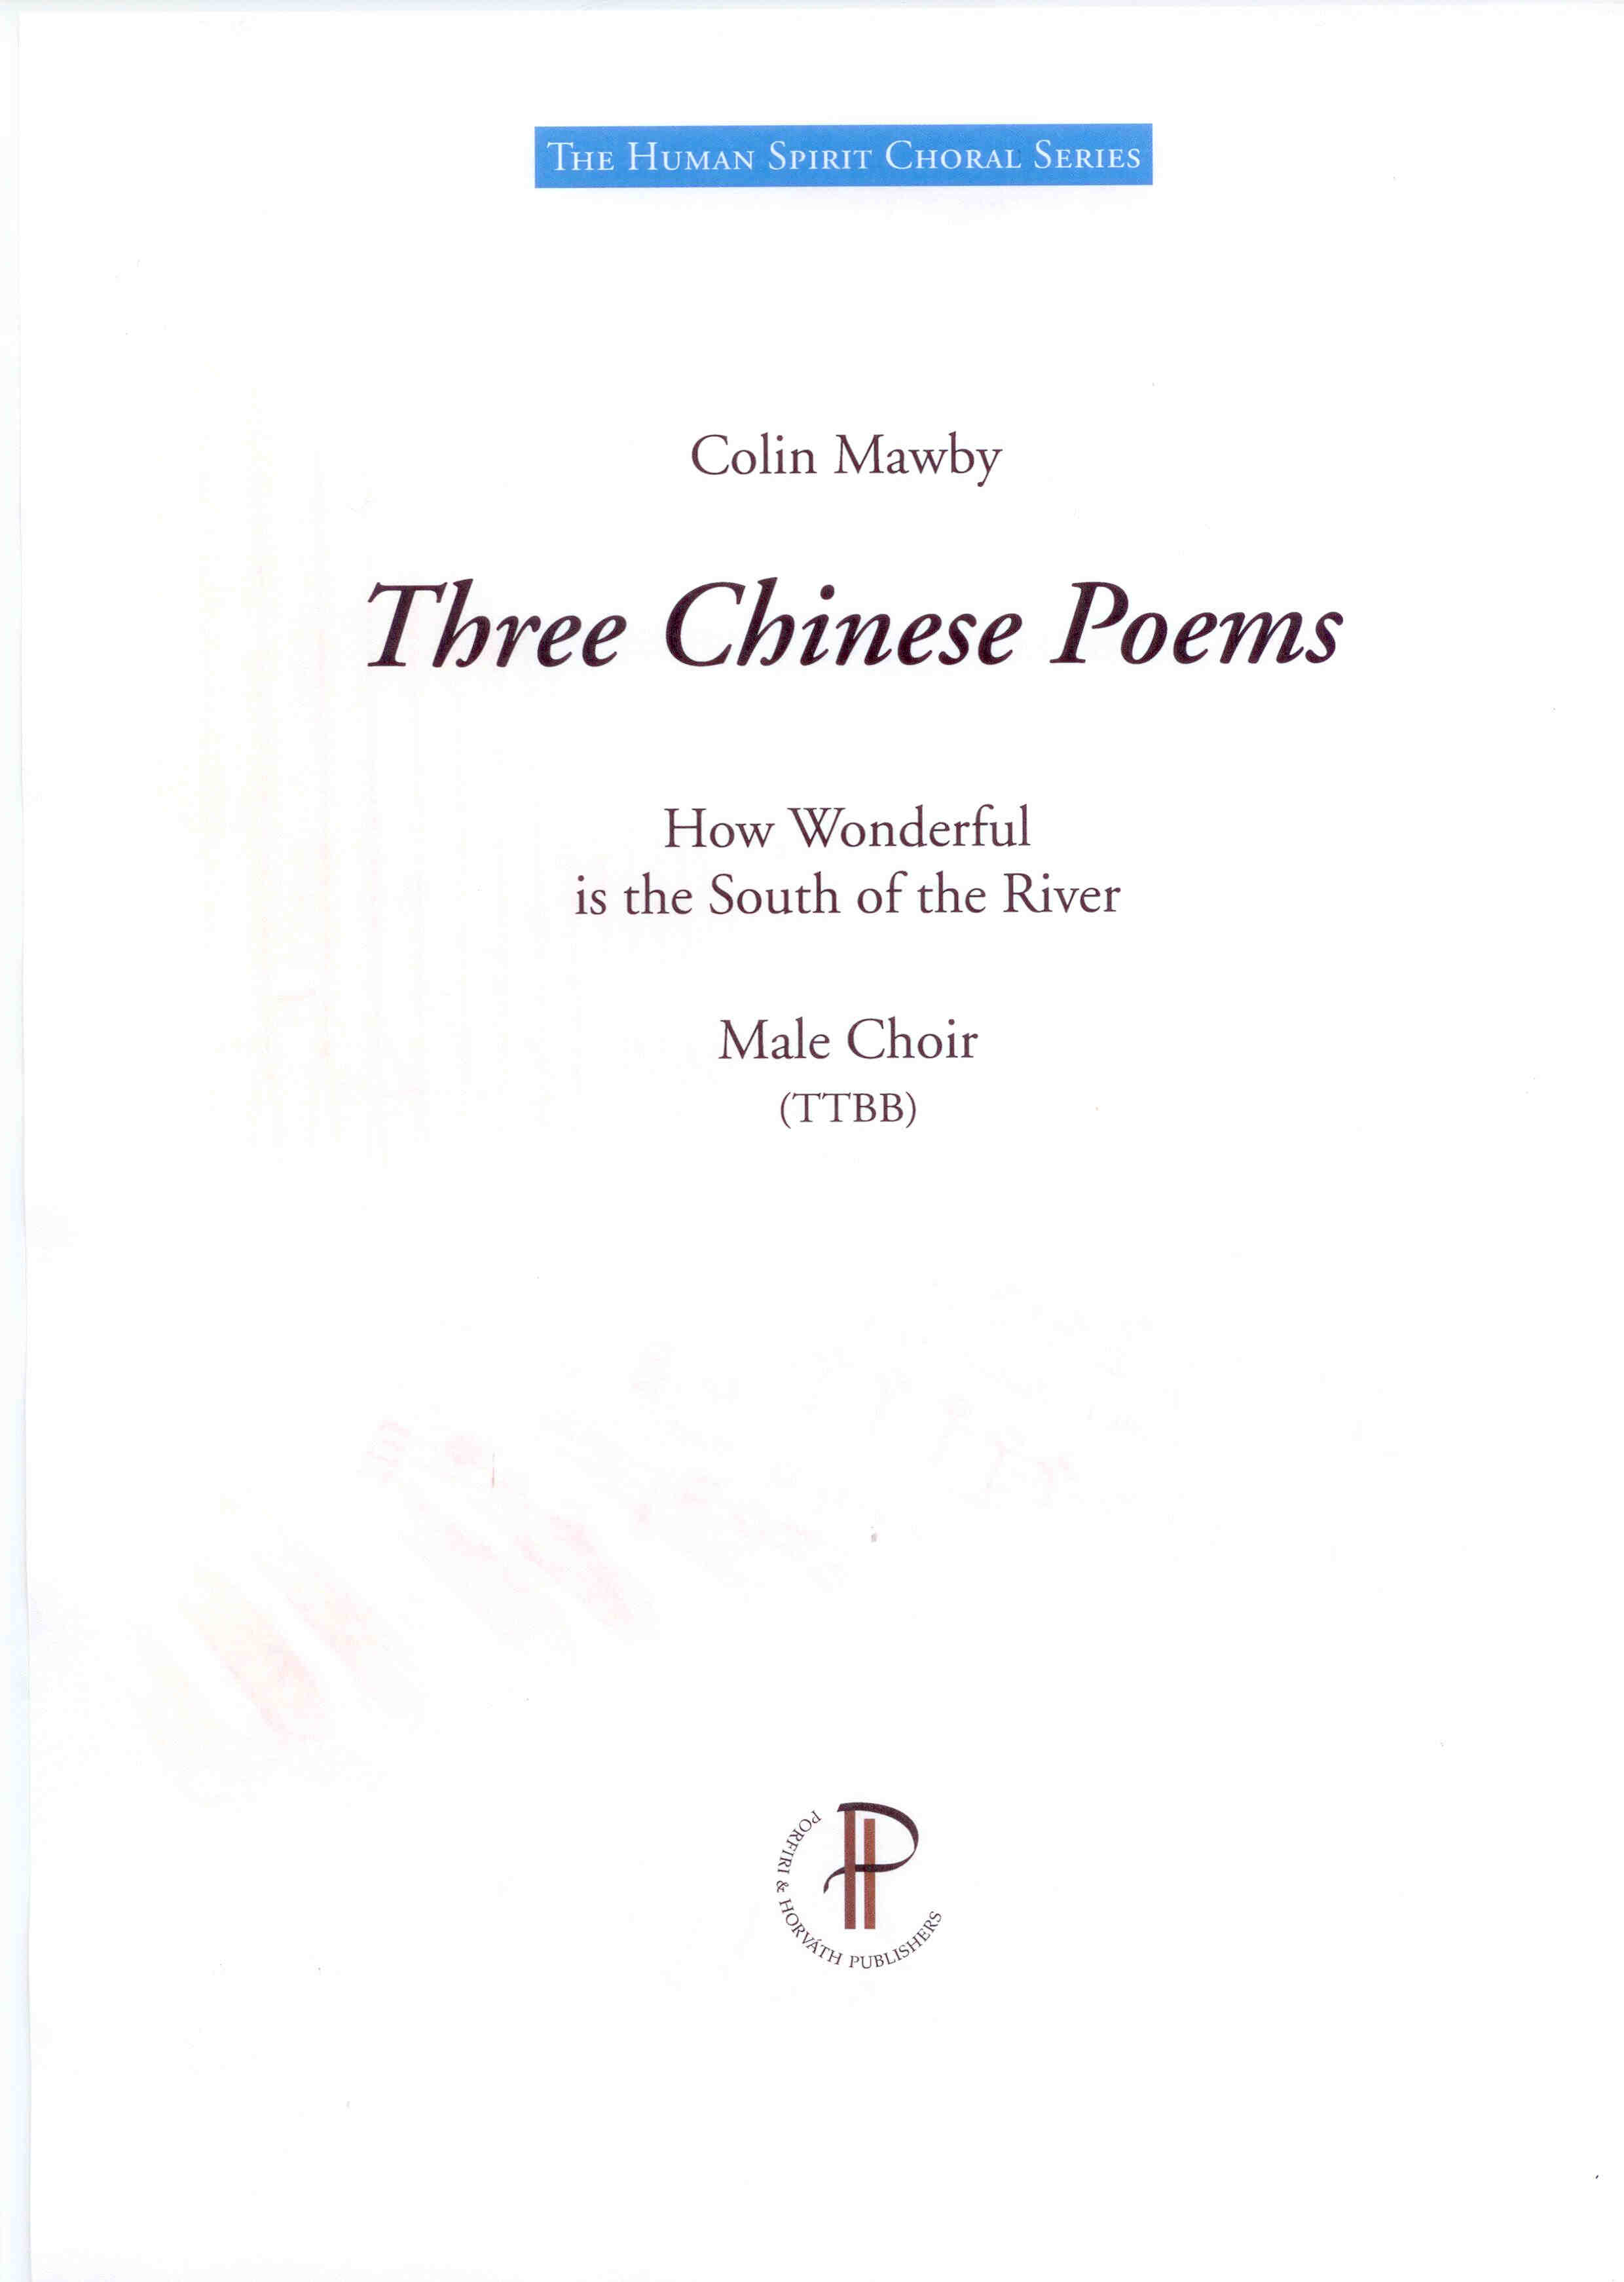 Three Chinese Poems - How Wonderful